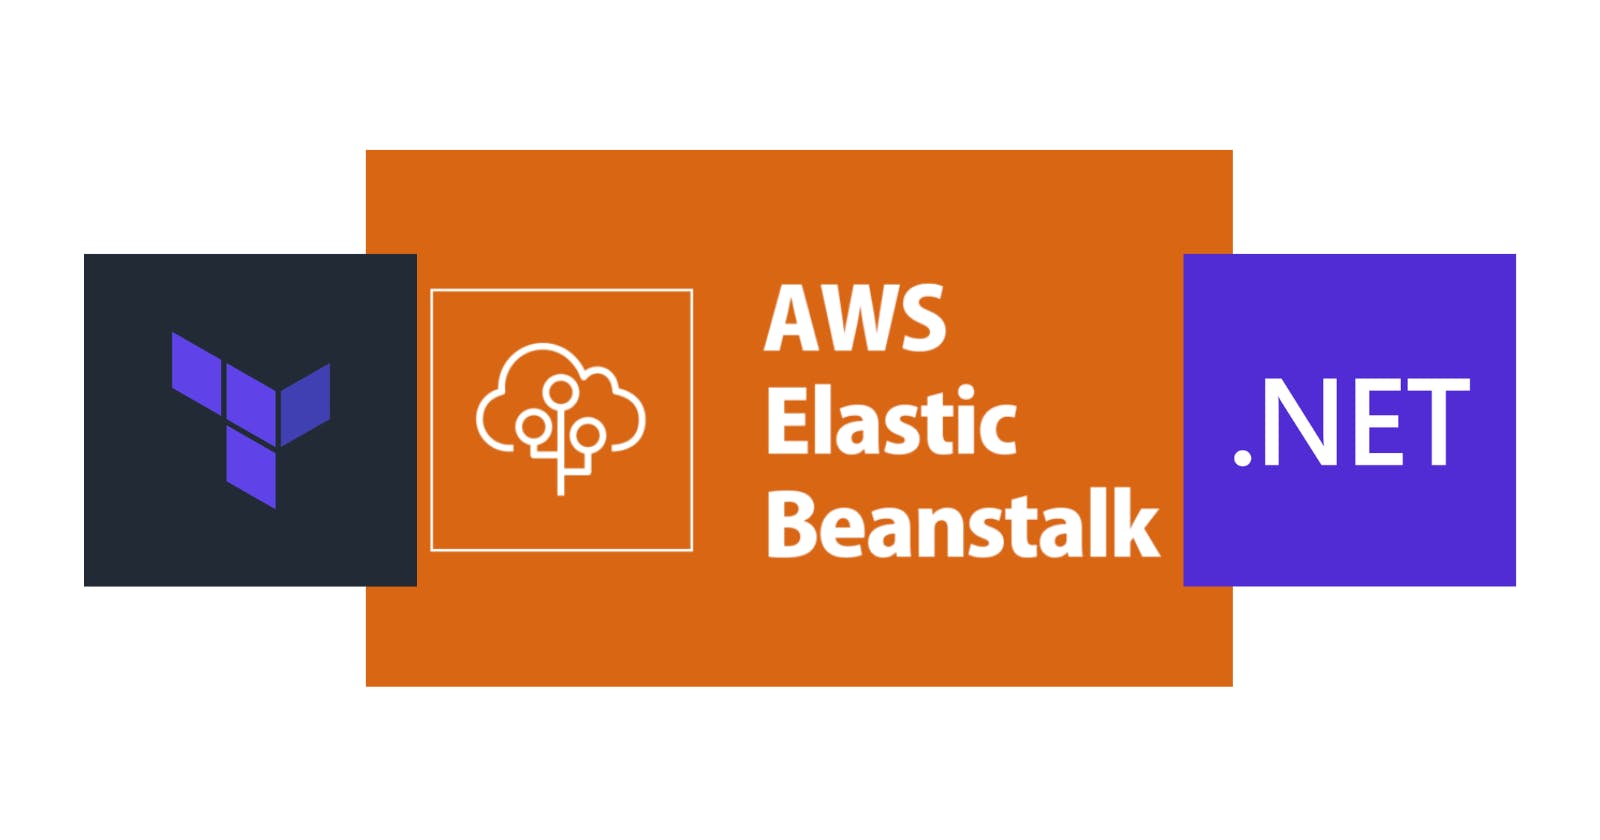 How to Deploy a .NET App on AWS Elastic Beanstalk using Terraform